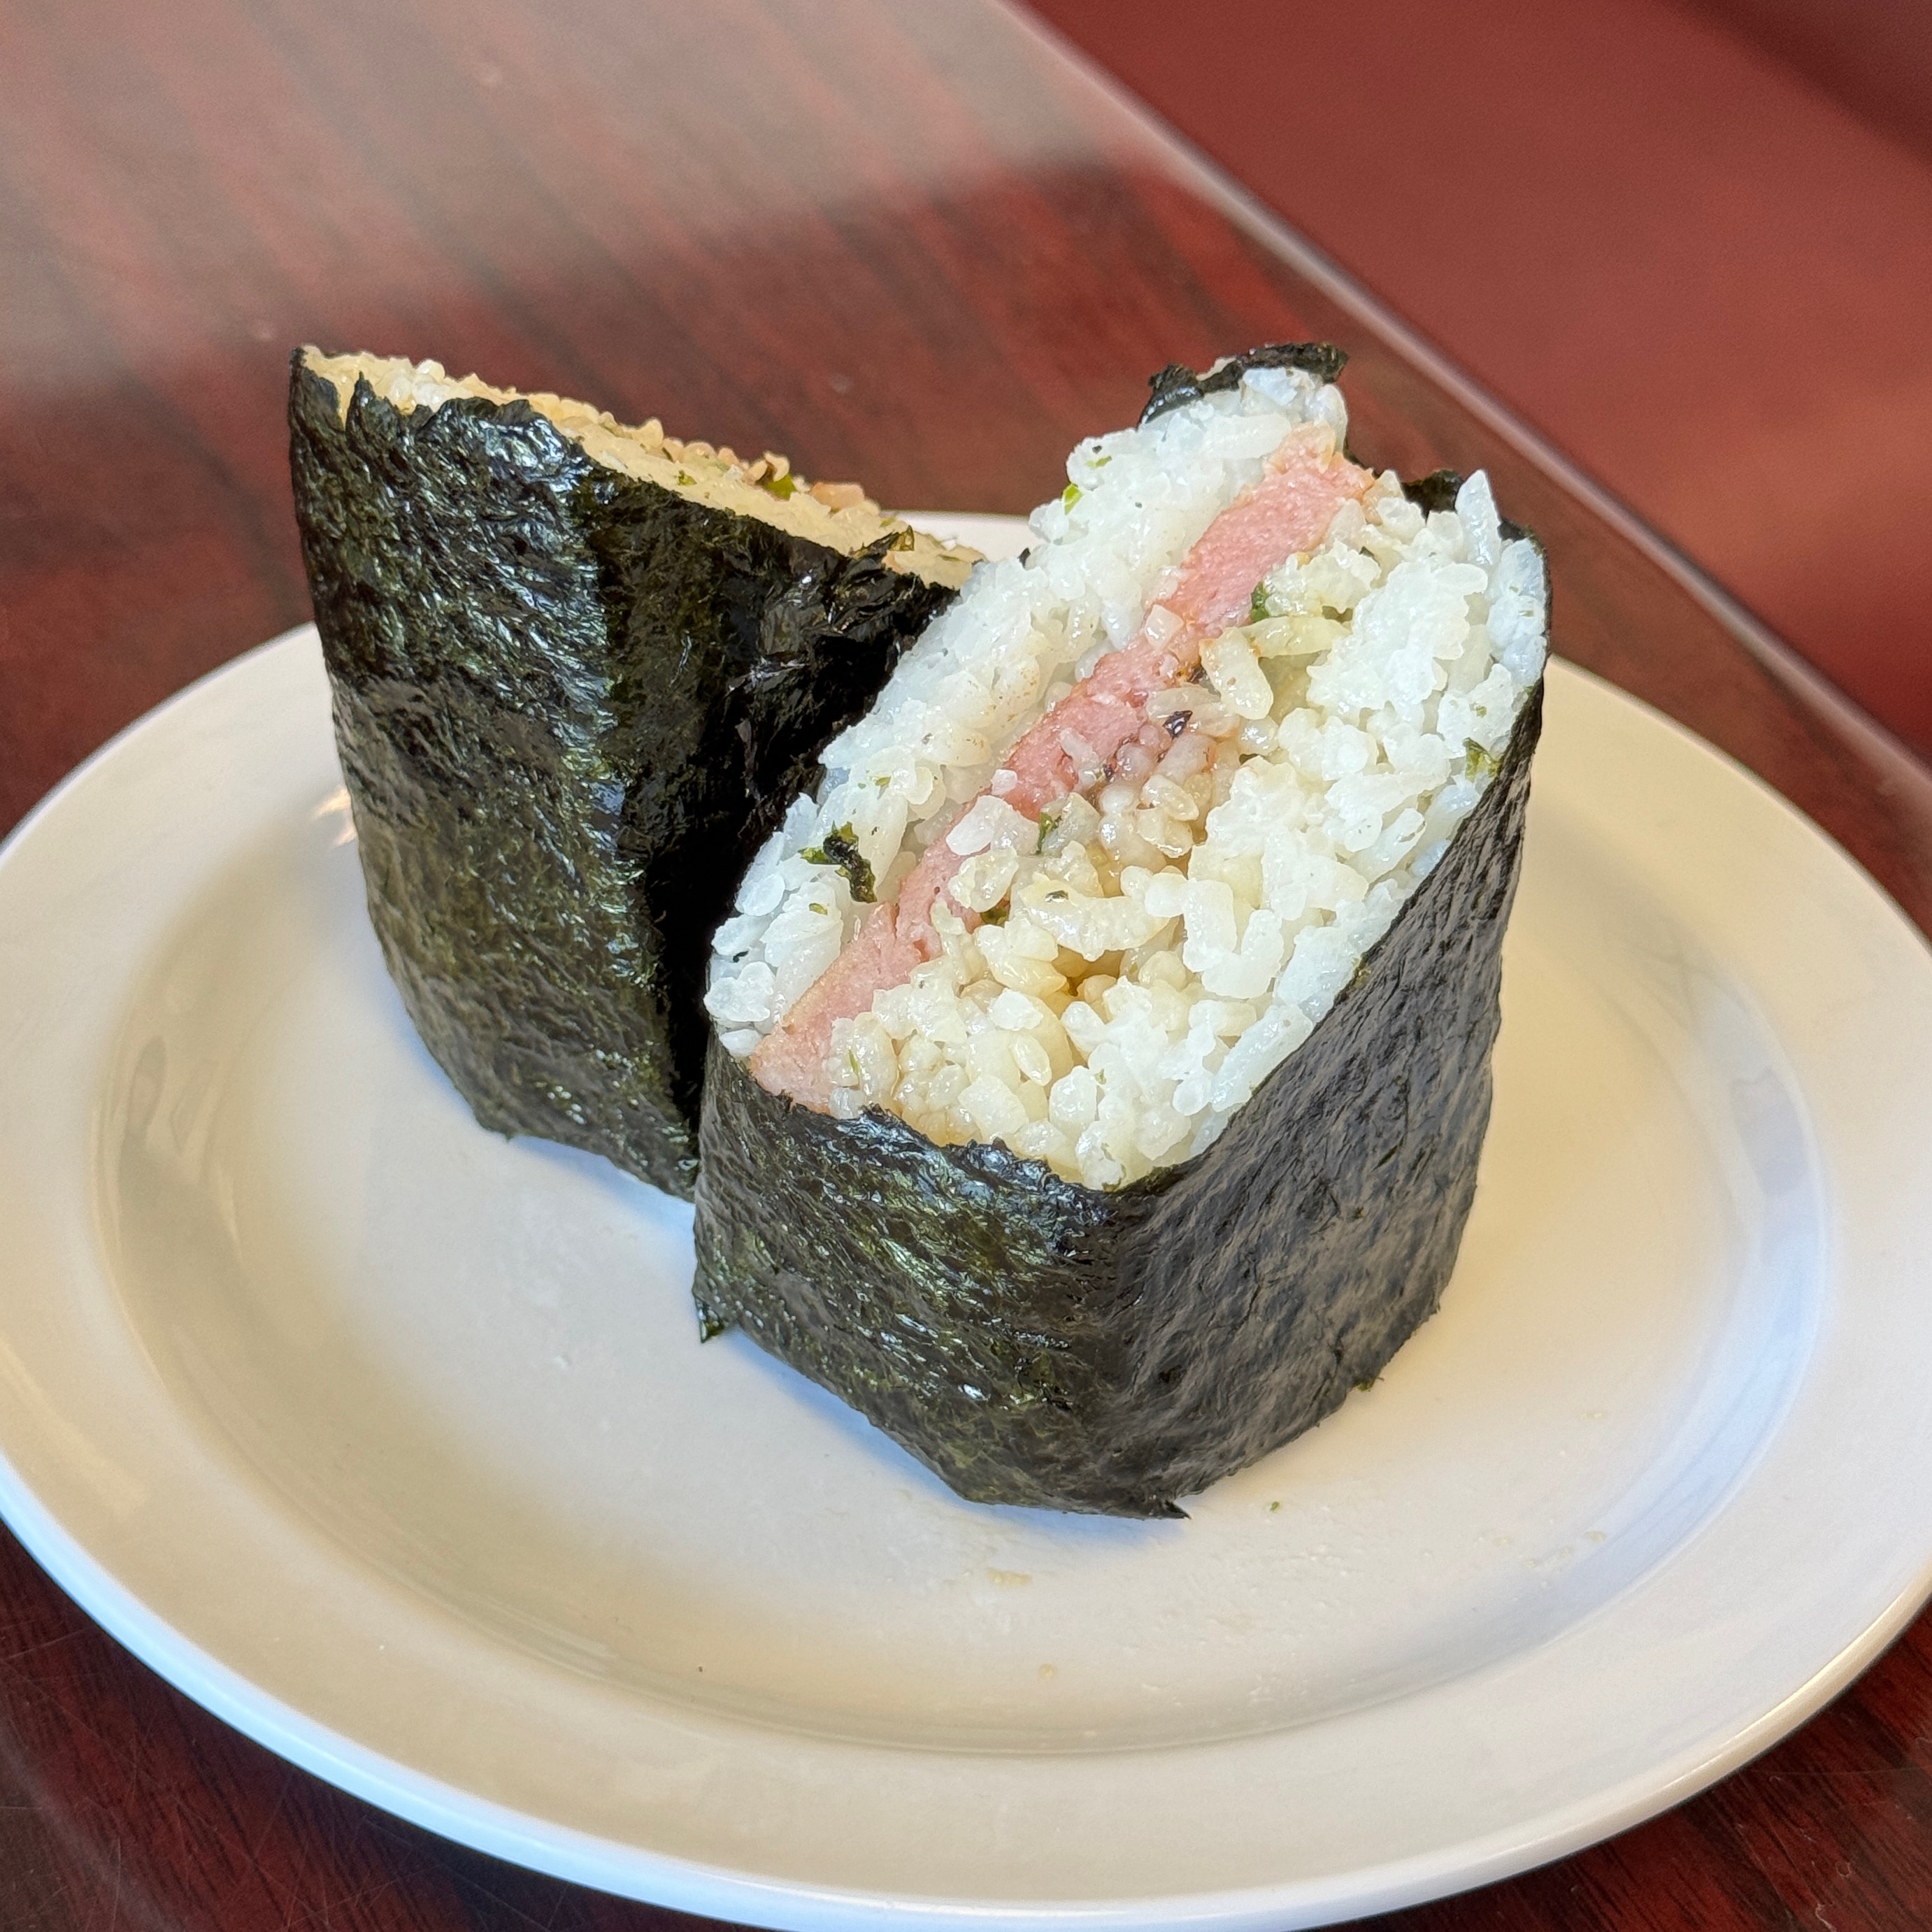 Spam Musubi $3 from TNT's Aloha Cafe on #foodmento http://foodmento.com/dish/57392